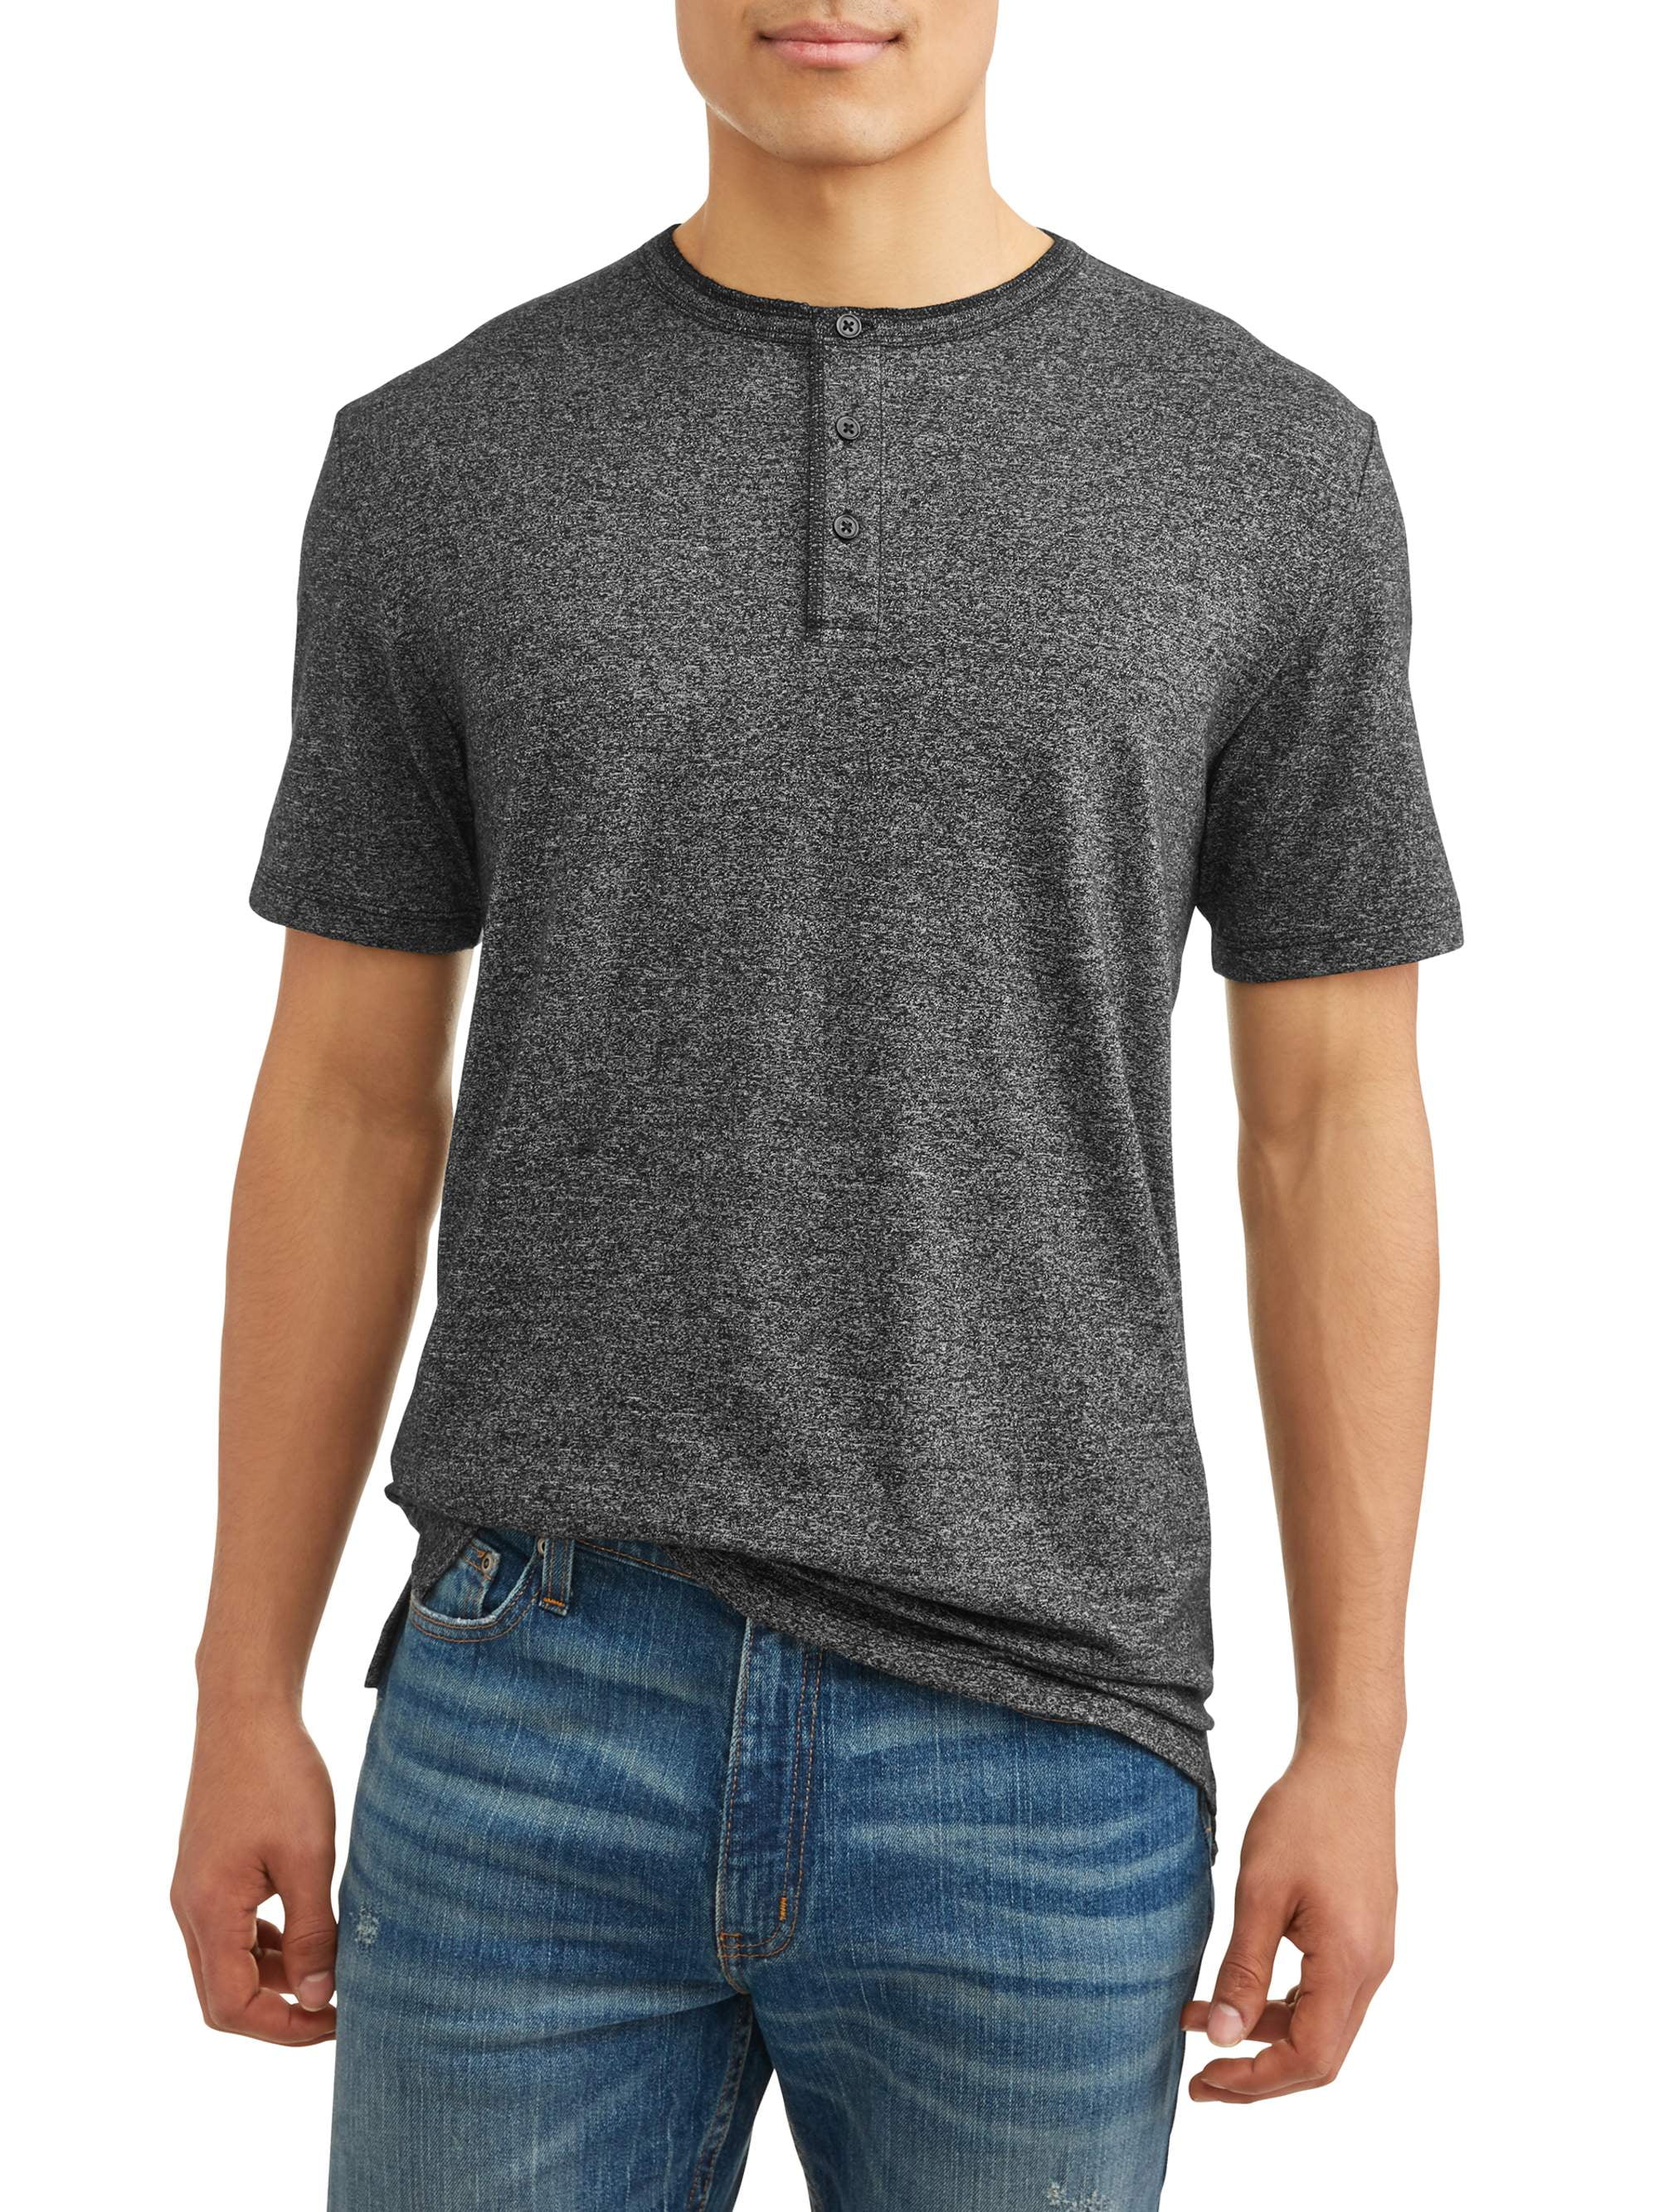 George Men's Short Sleeve Fashion Henley T-Shirt - Walmart.com